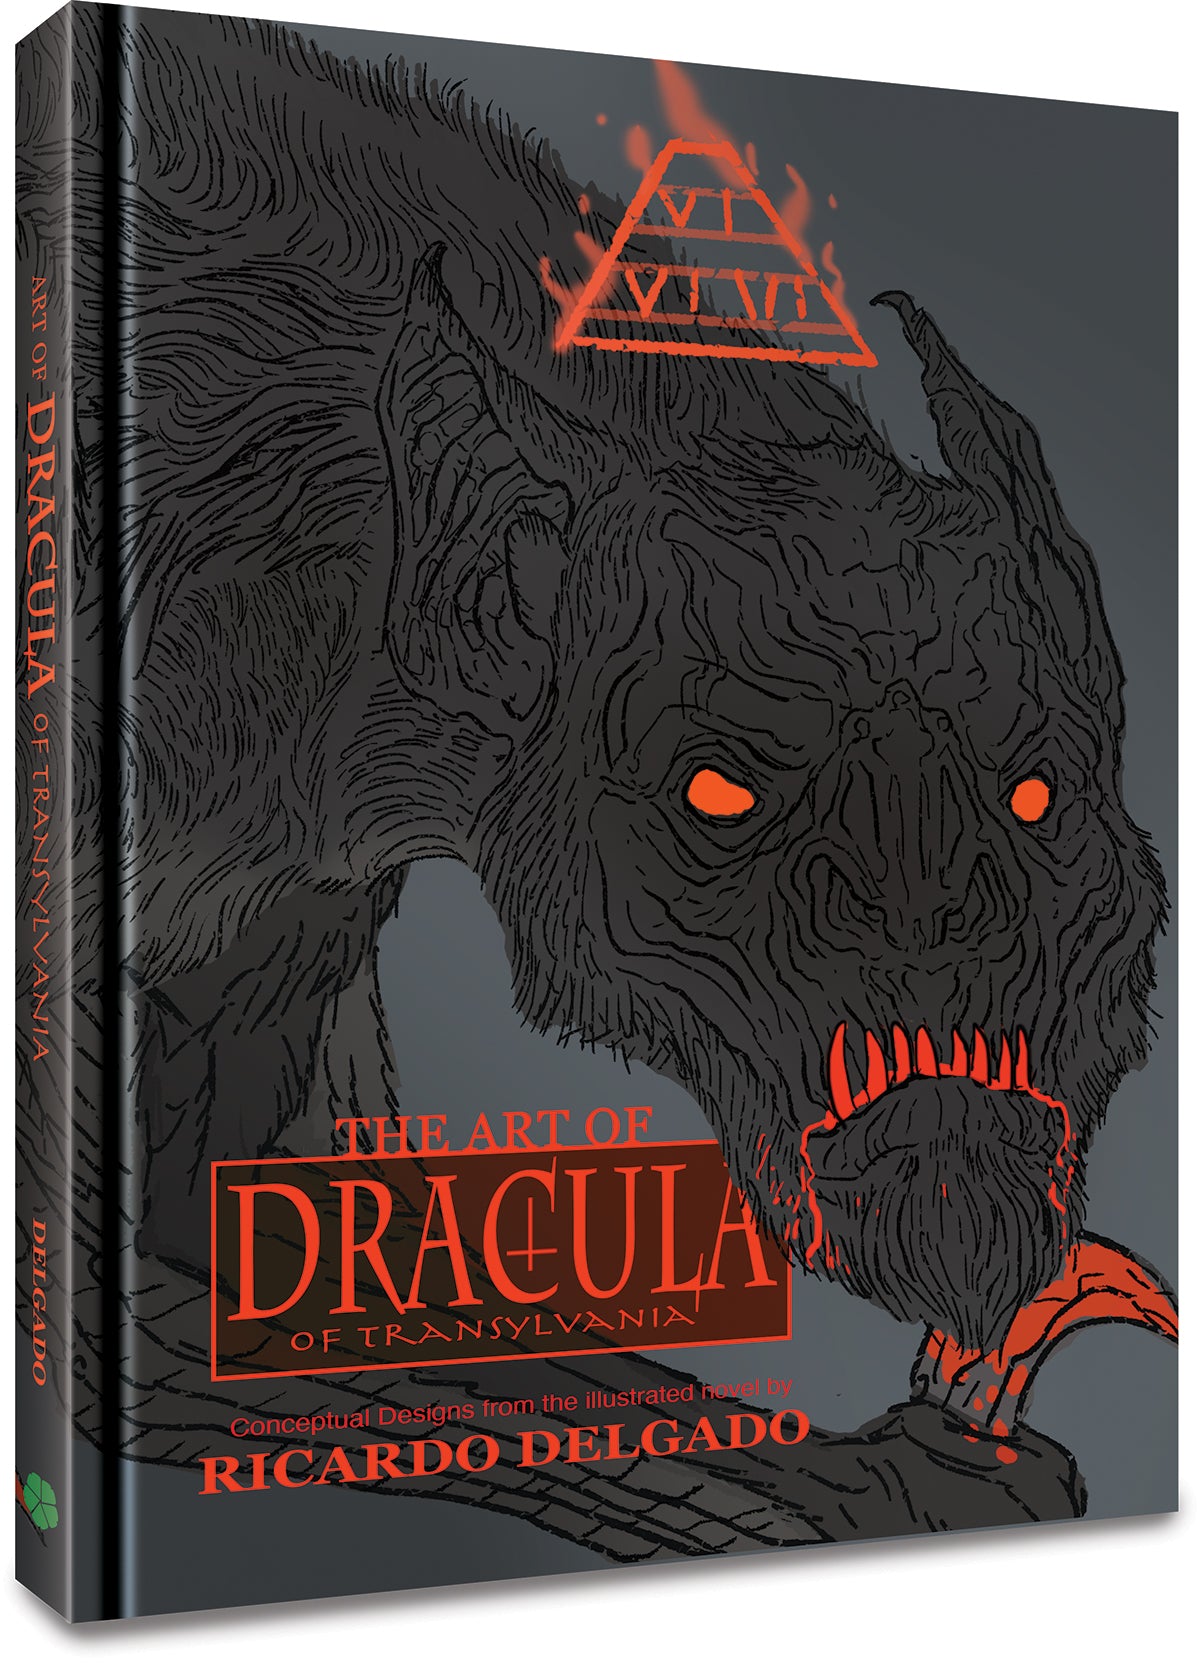 The Art of Dracula of Transylvania